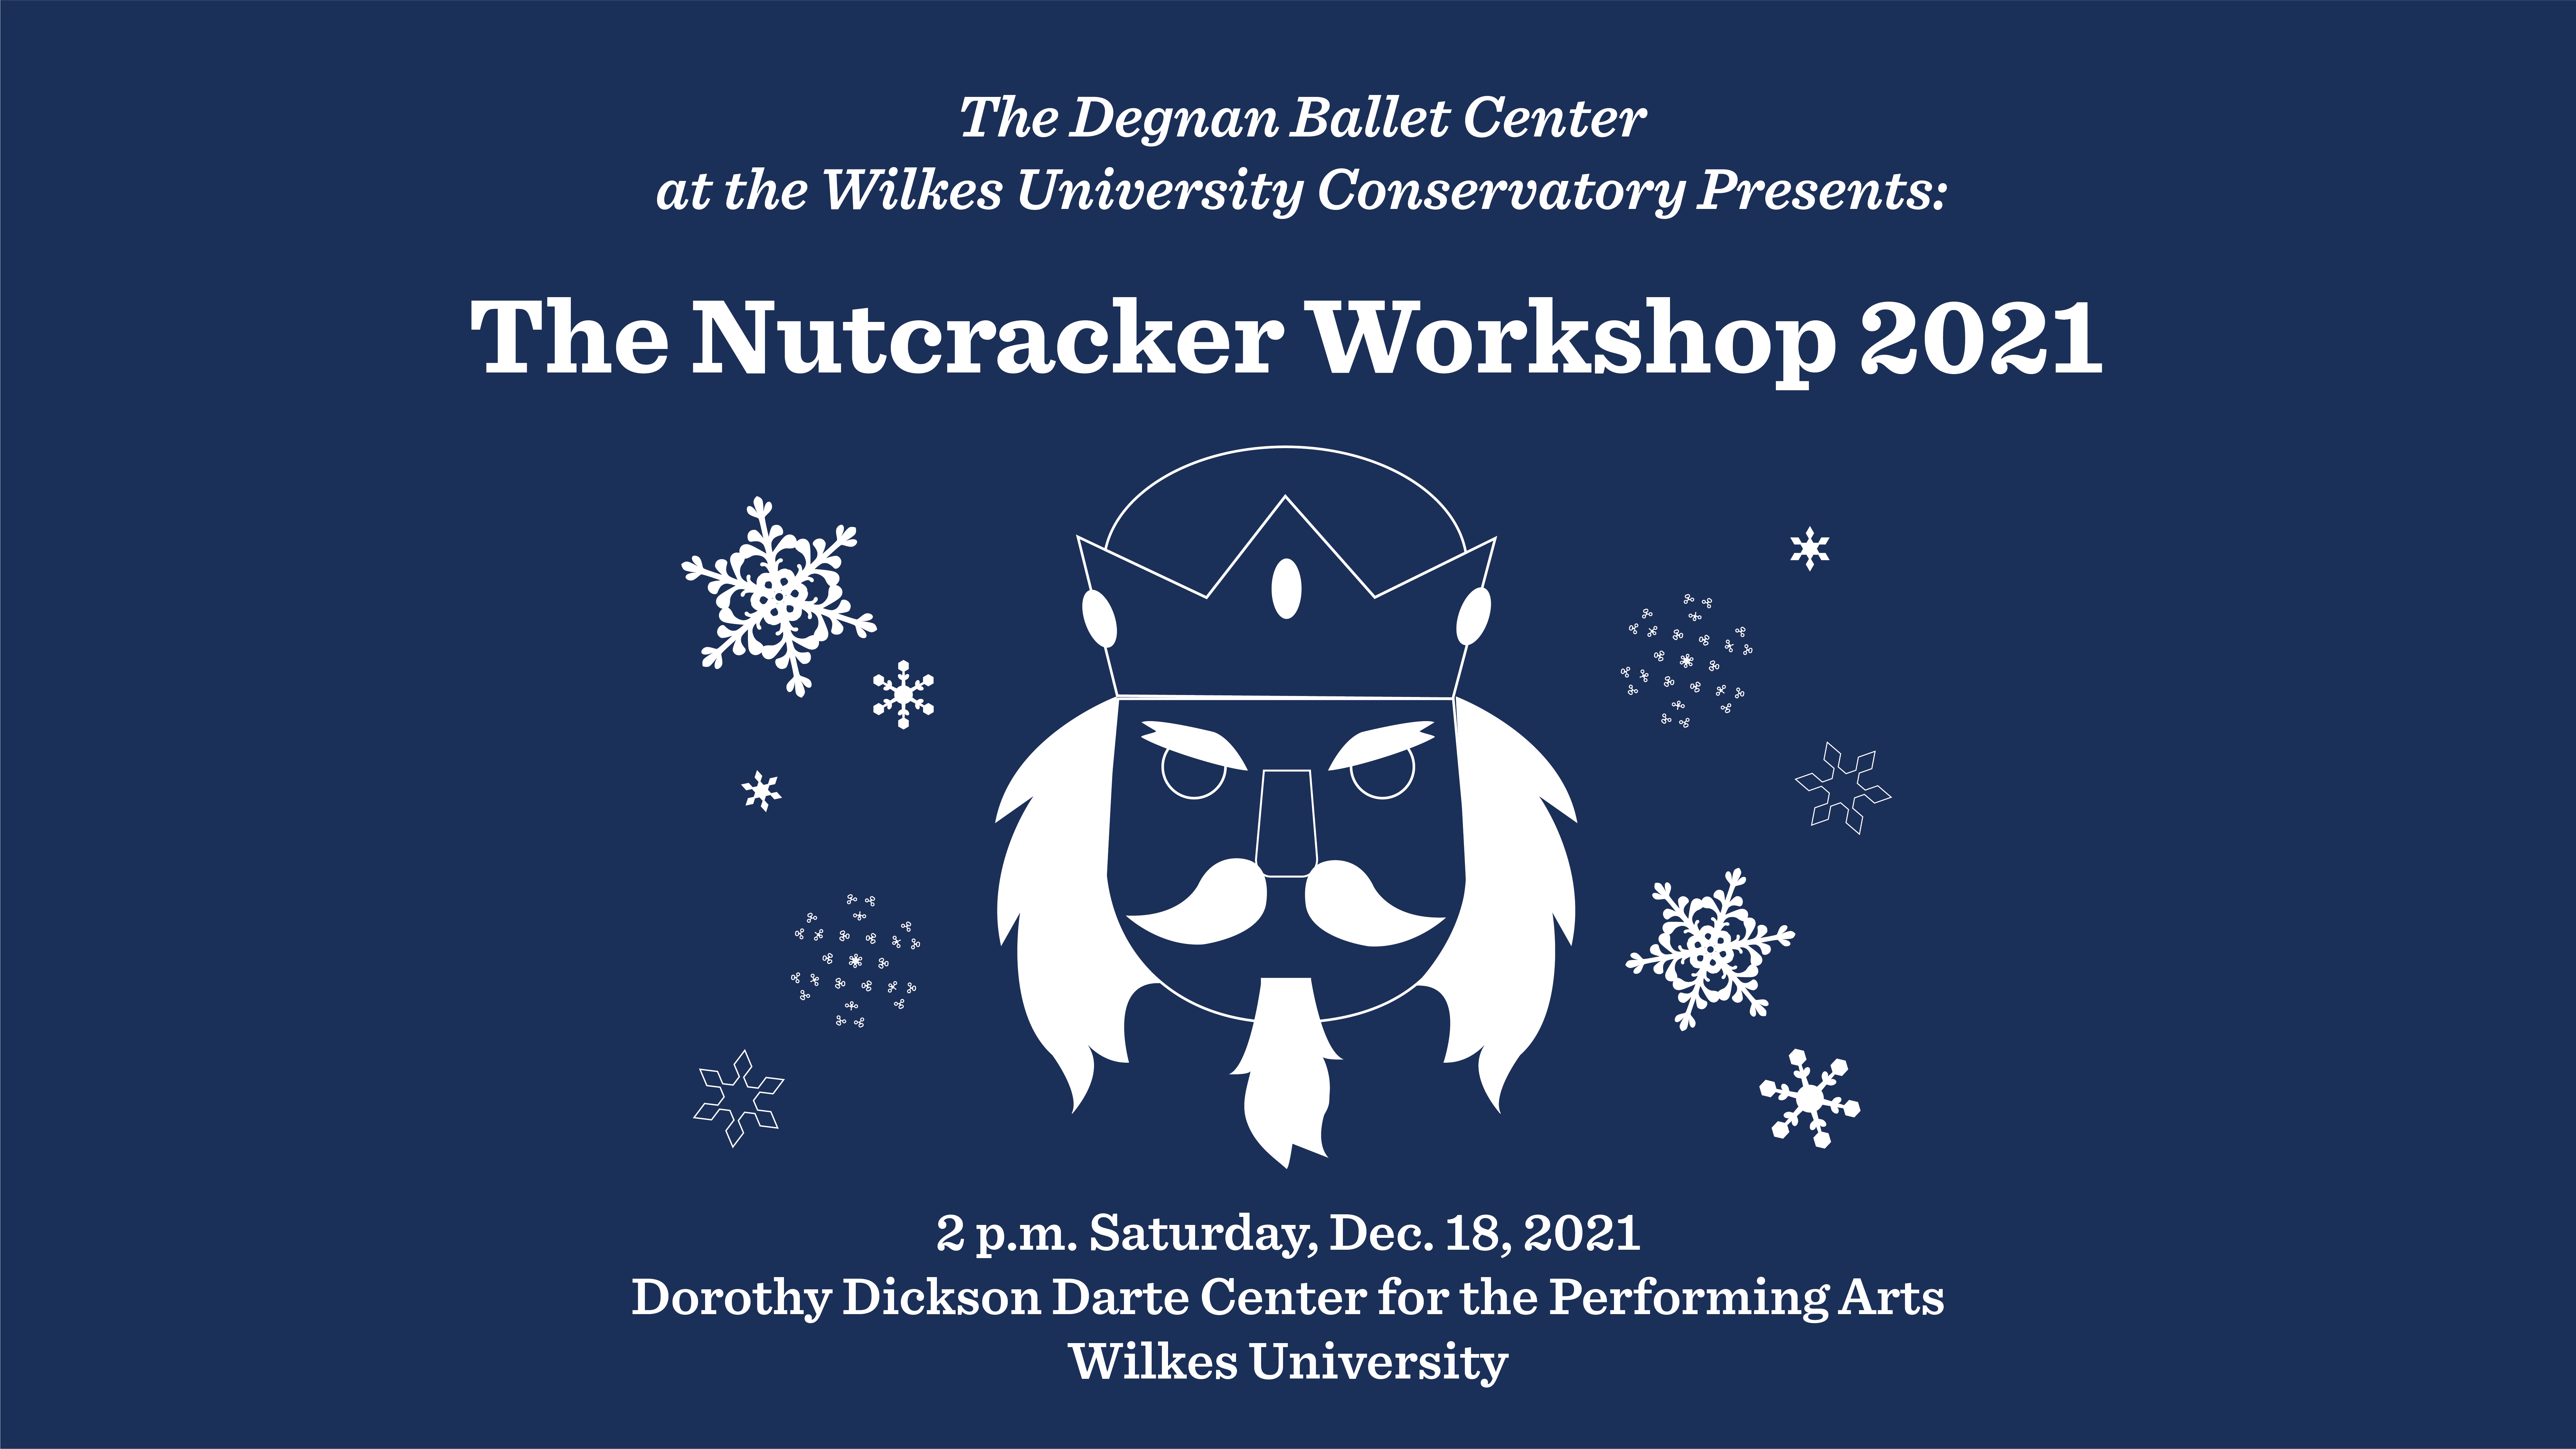 The Nutcracker Workshop 2021